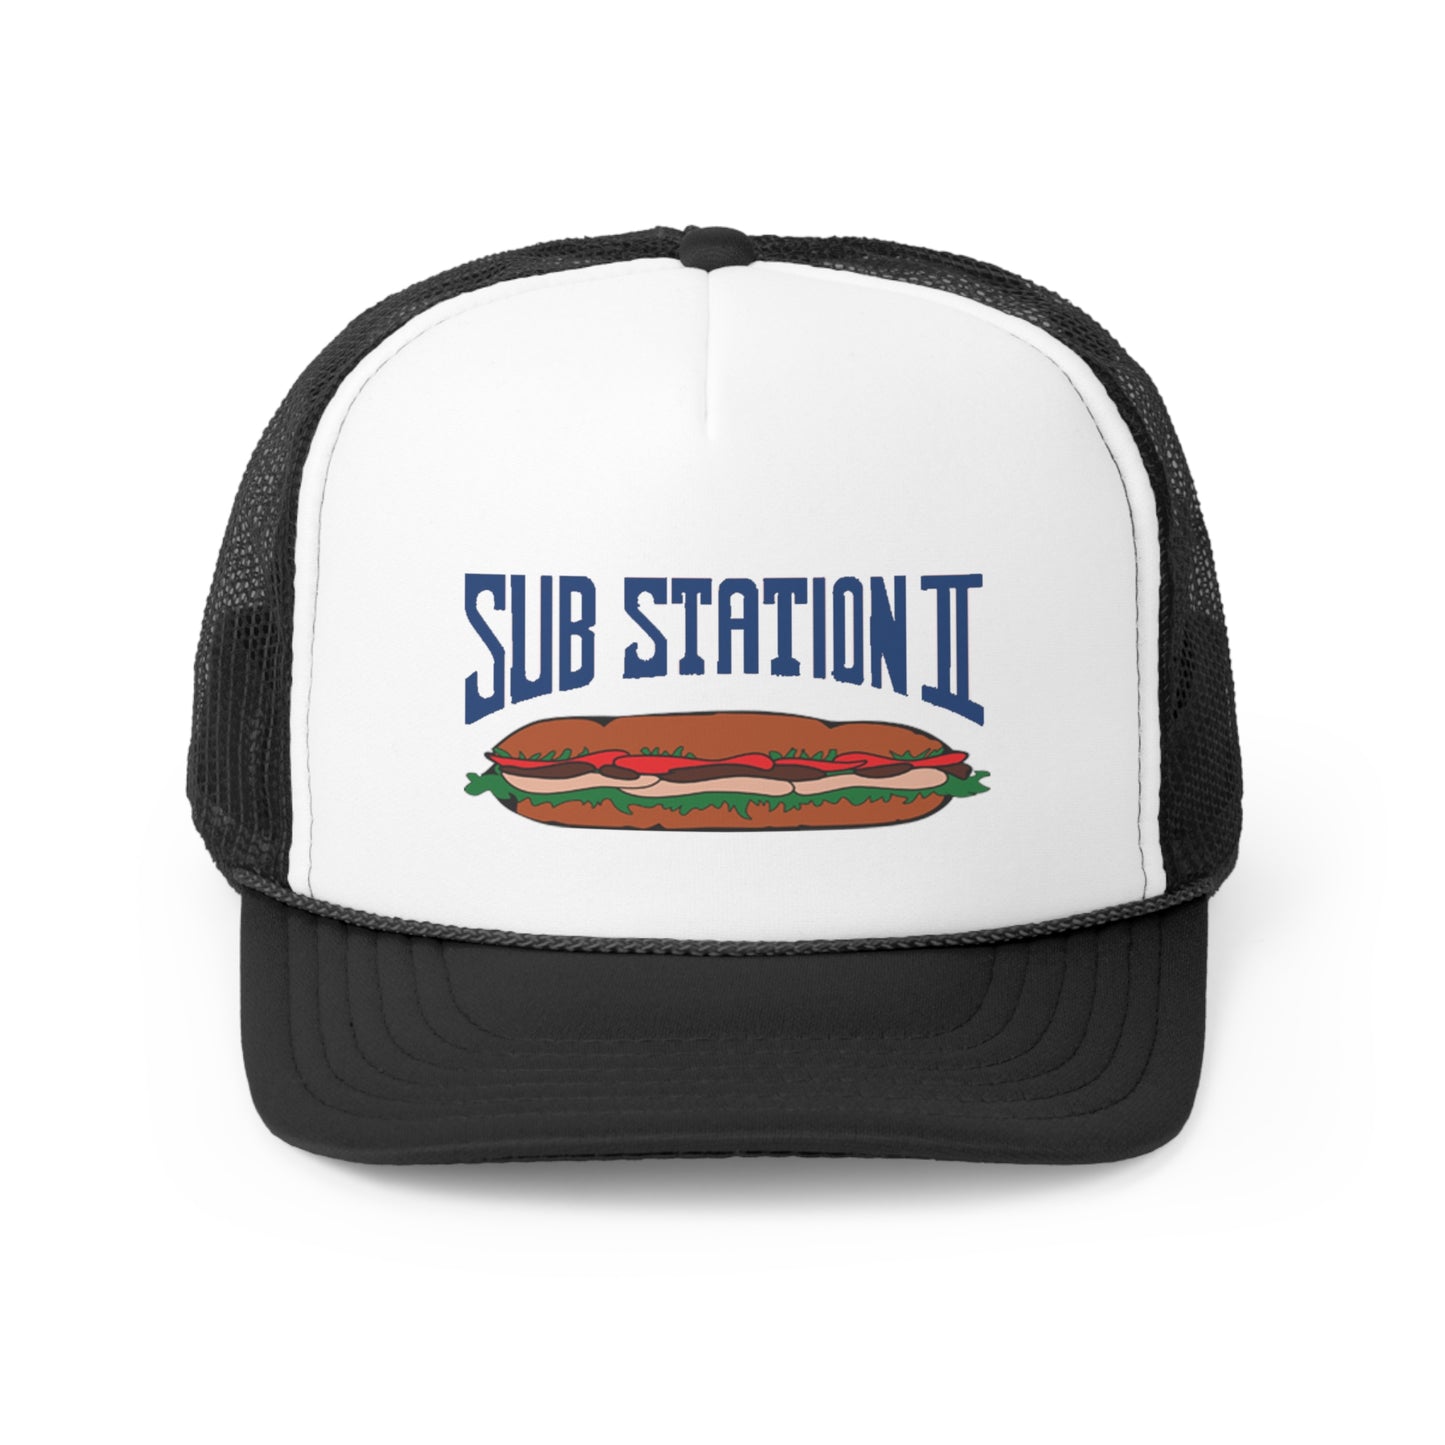 Retro Sub Station II Trucker Hat